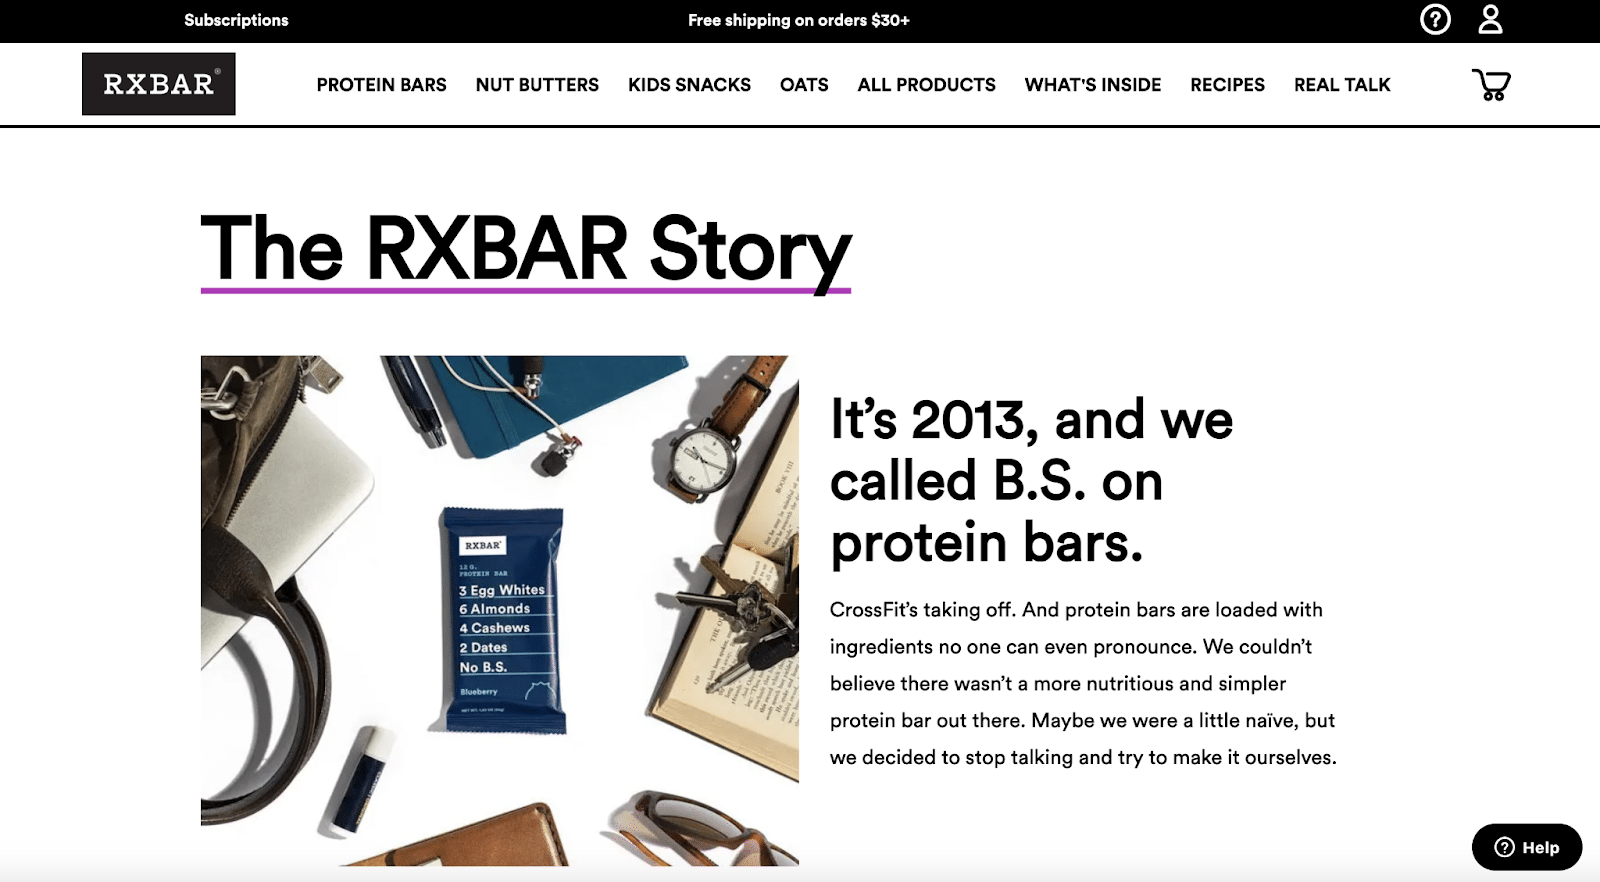 RXBAR 在其“关于我们”页面上分享了公司故事。